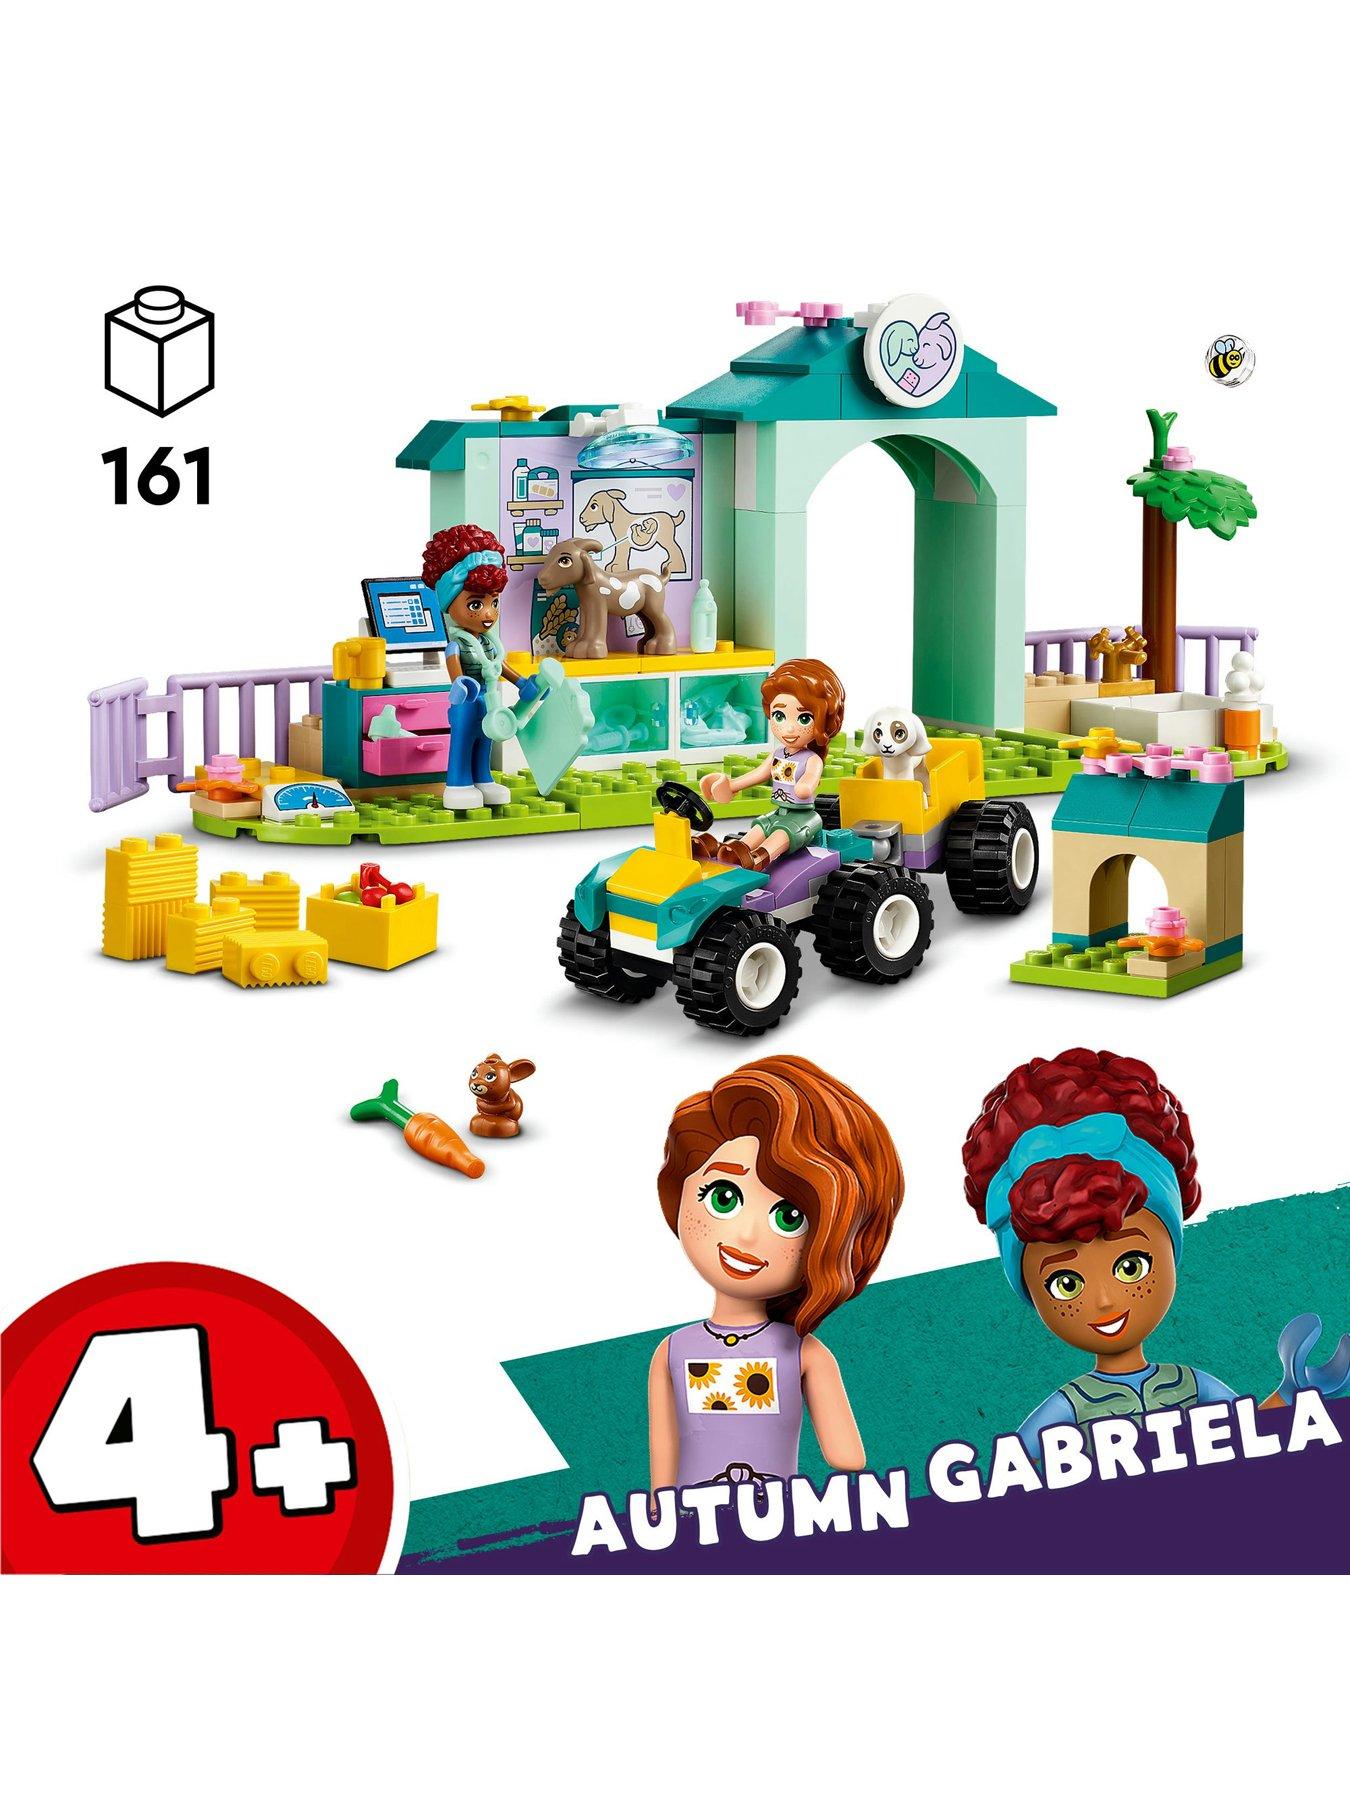 Lego Friends Farm Animal Vet Clinic Toy Set 42632 